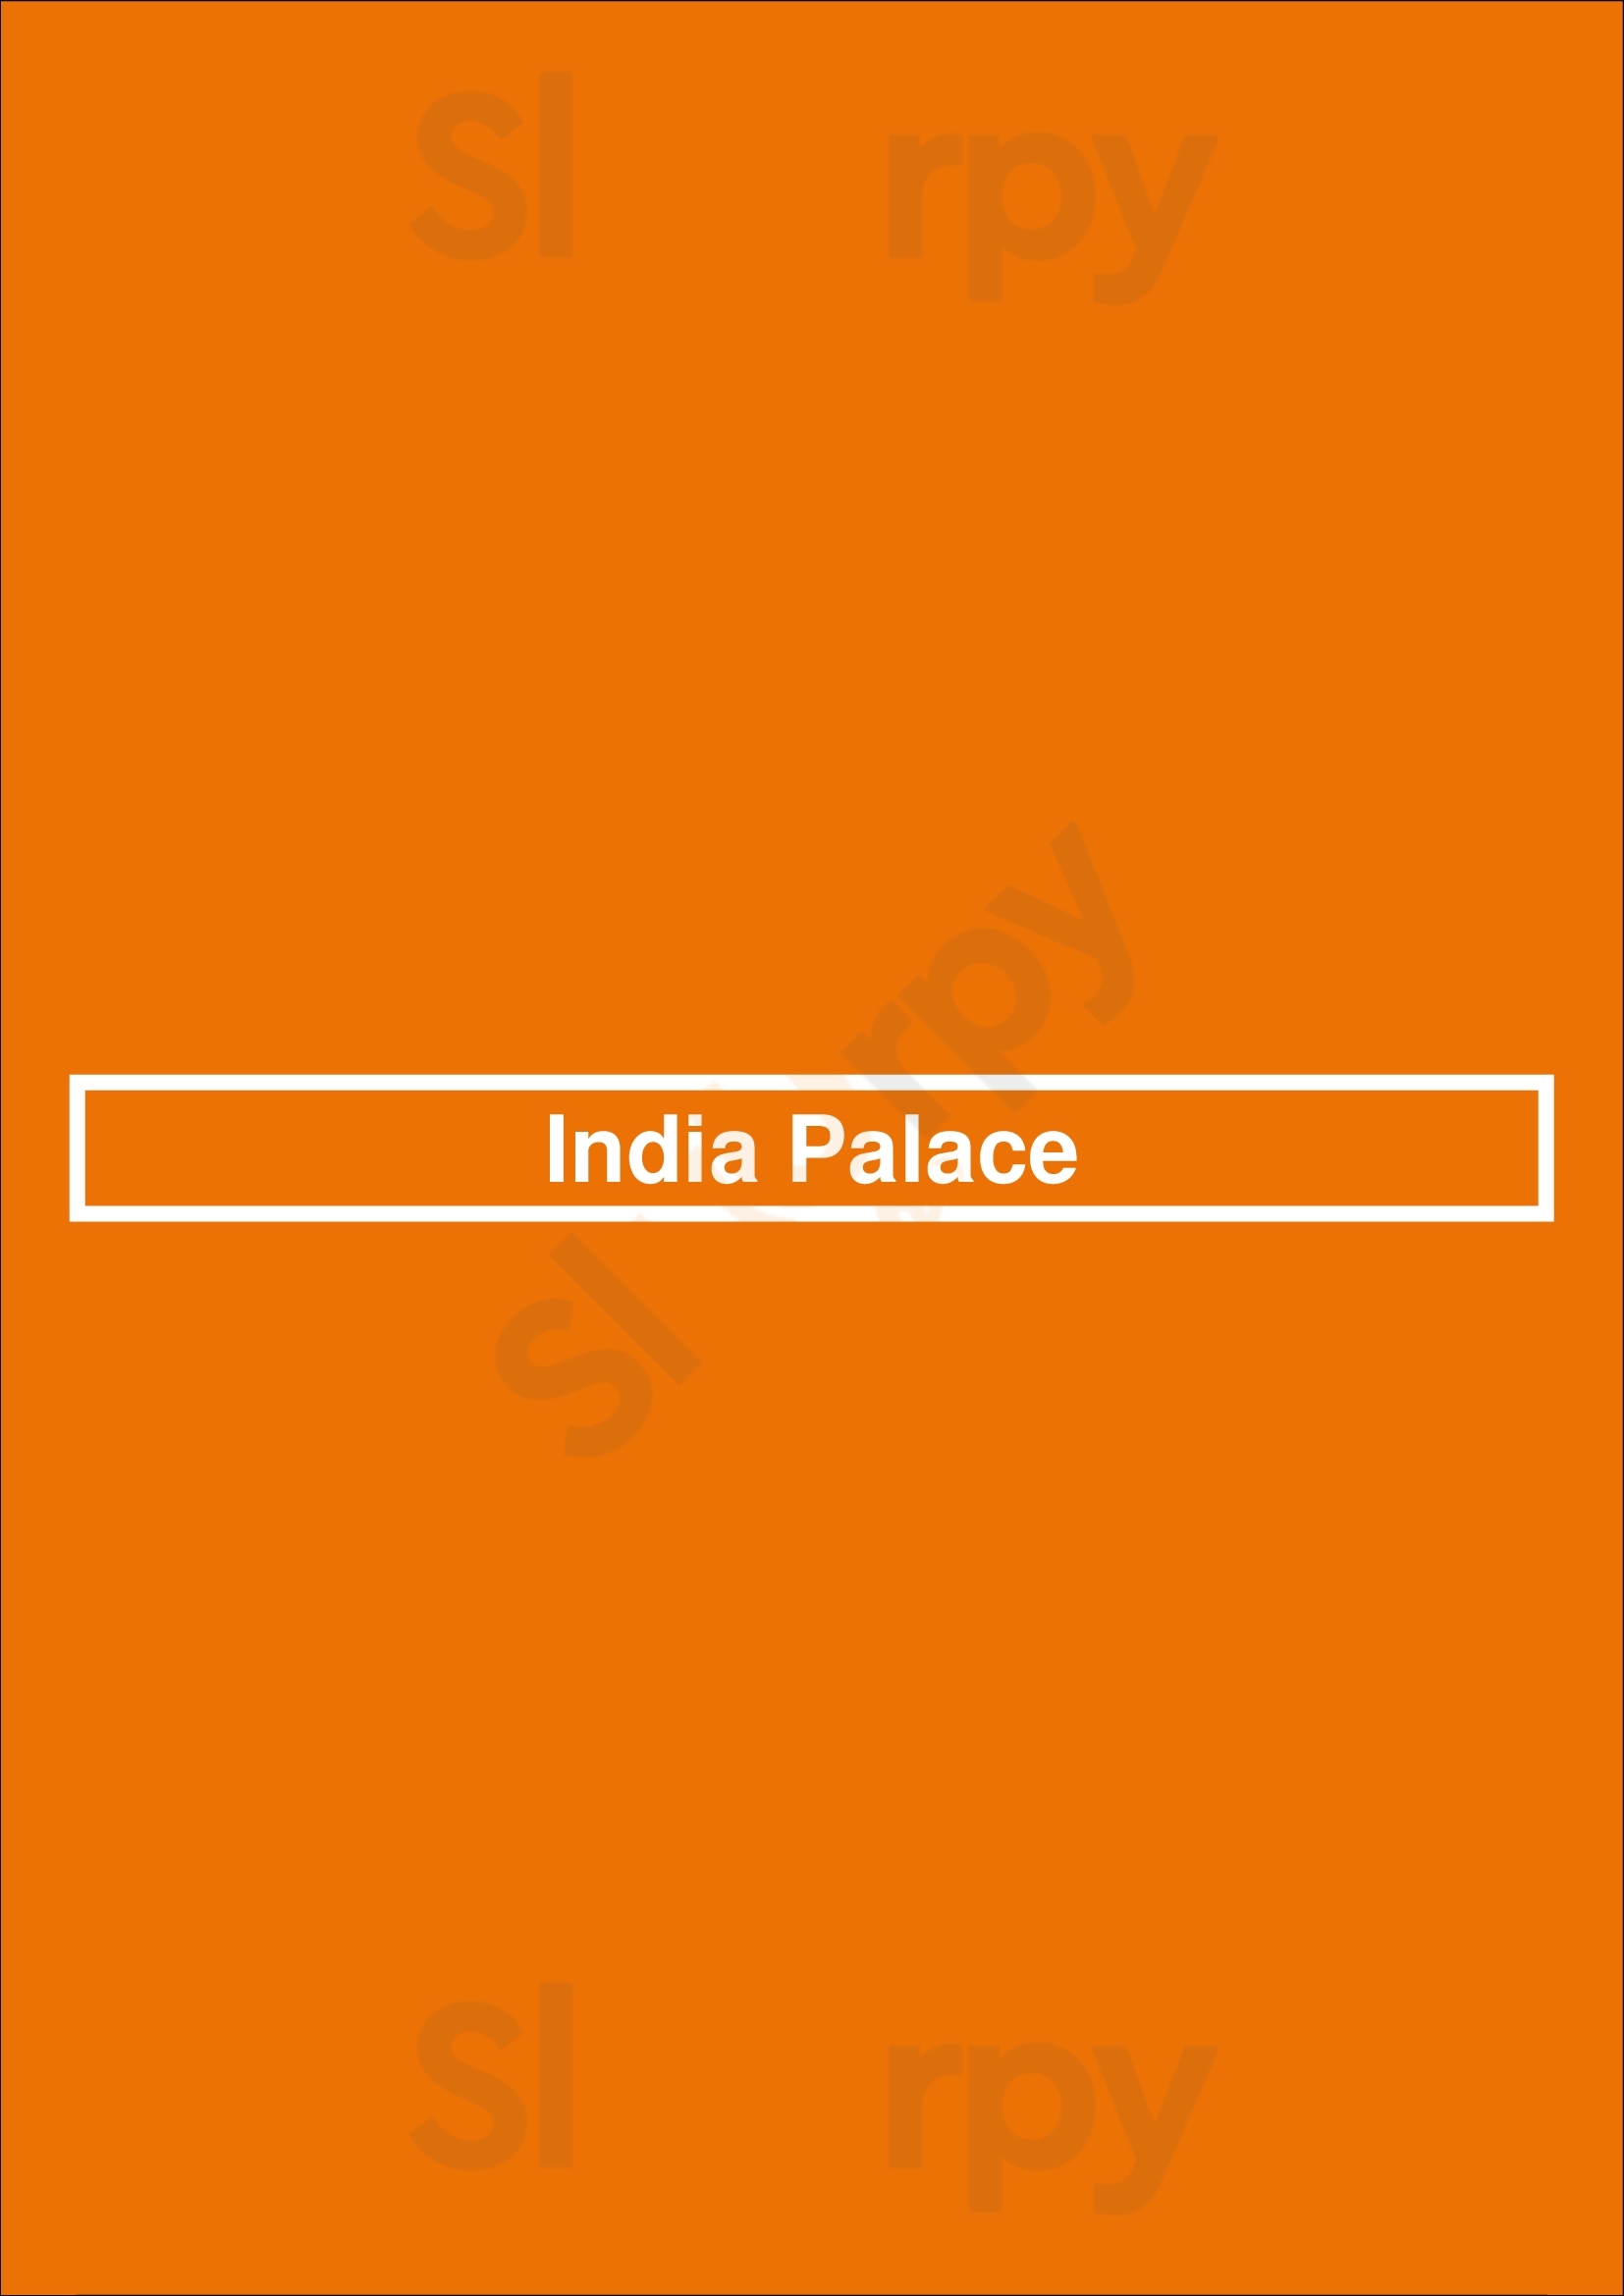 India Palace Dallas Menu - 1